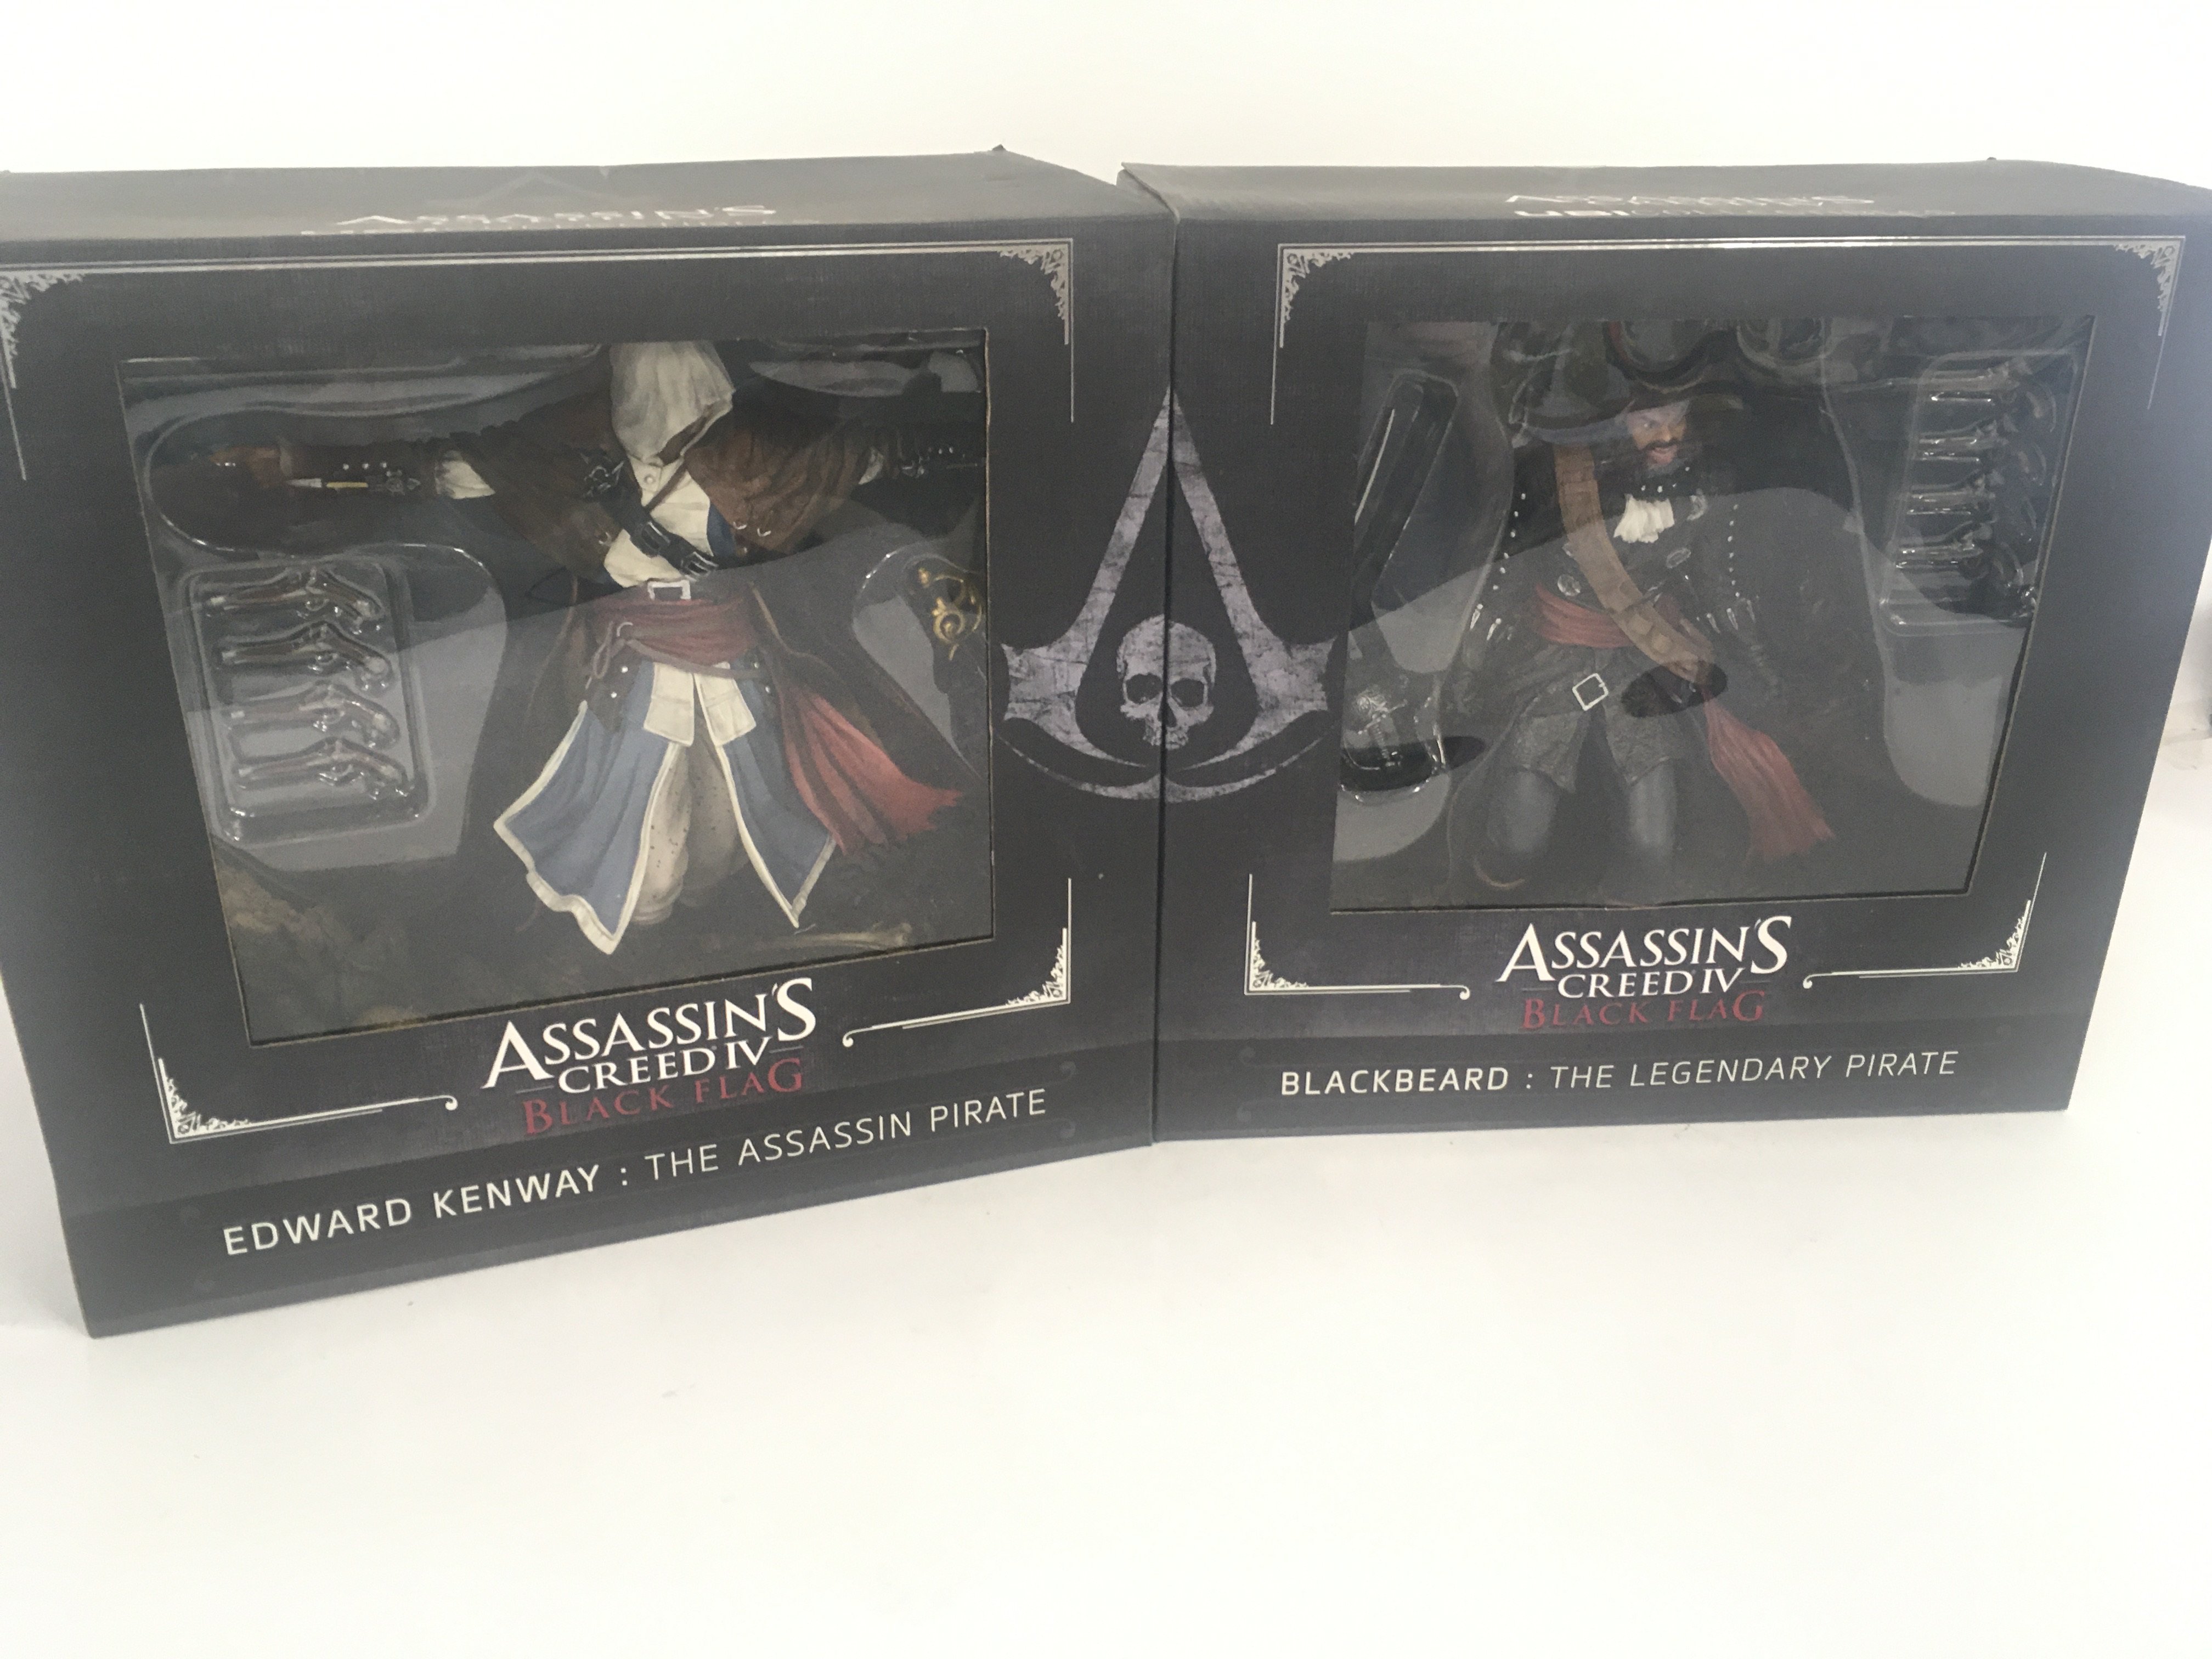 A par of boxed ASSASSINS CREED IV action figures.